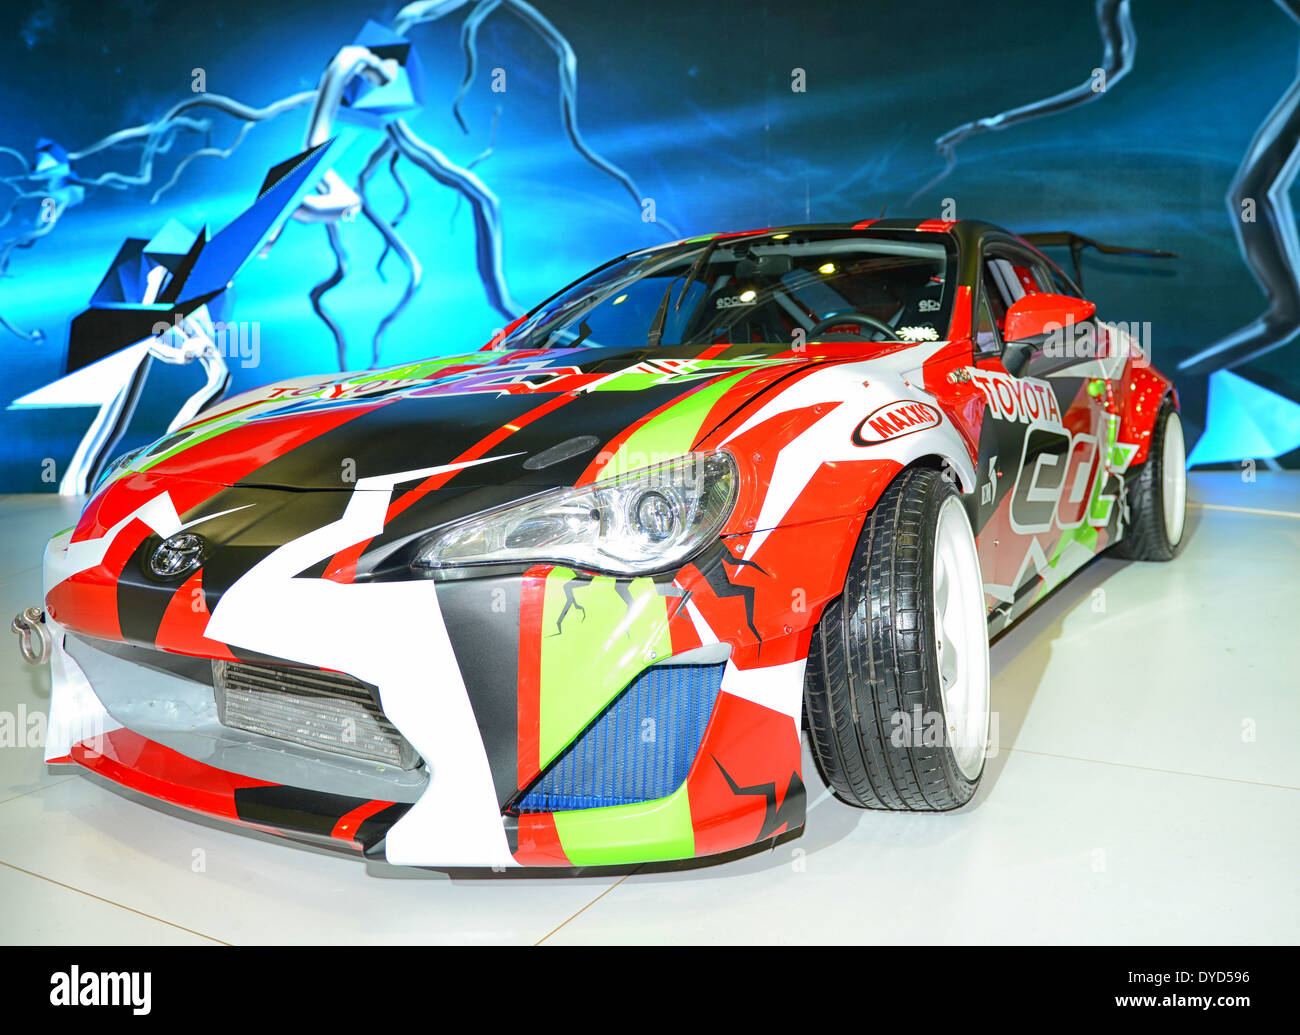 Toyota Racing Car on stand at Dubai Motor Show 2013, UAE Stock Photo